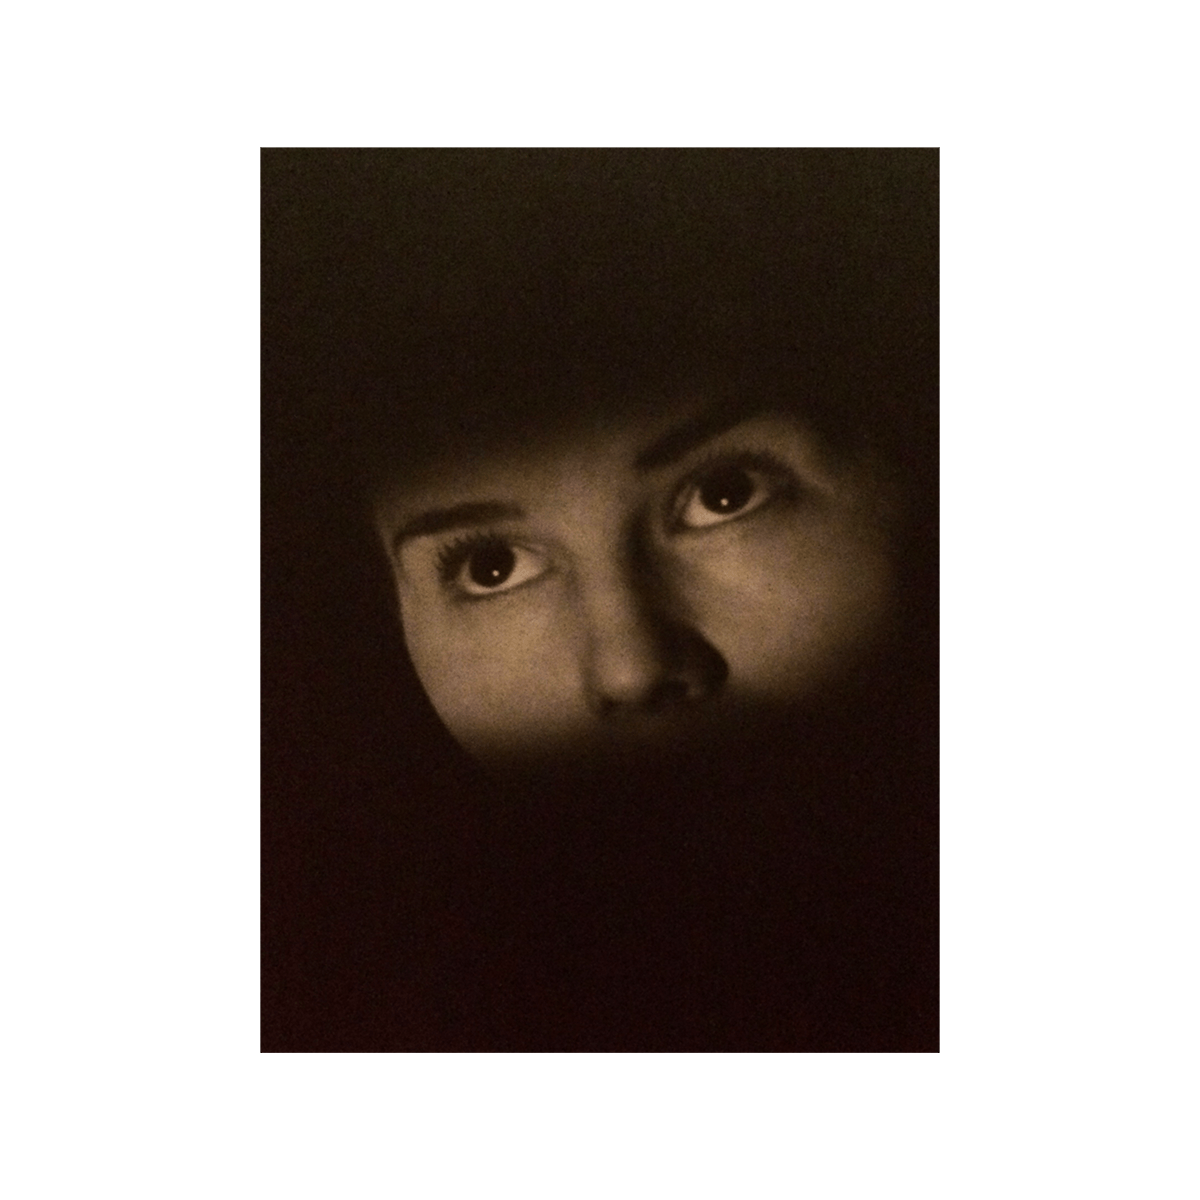 Ann Matyka Photo of Young Woman's Eyes